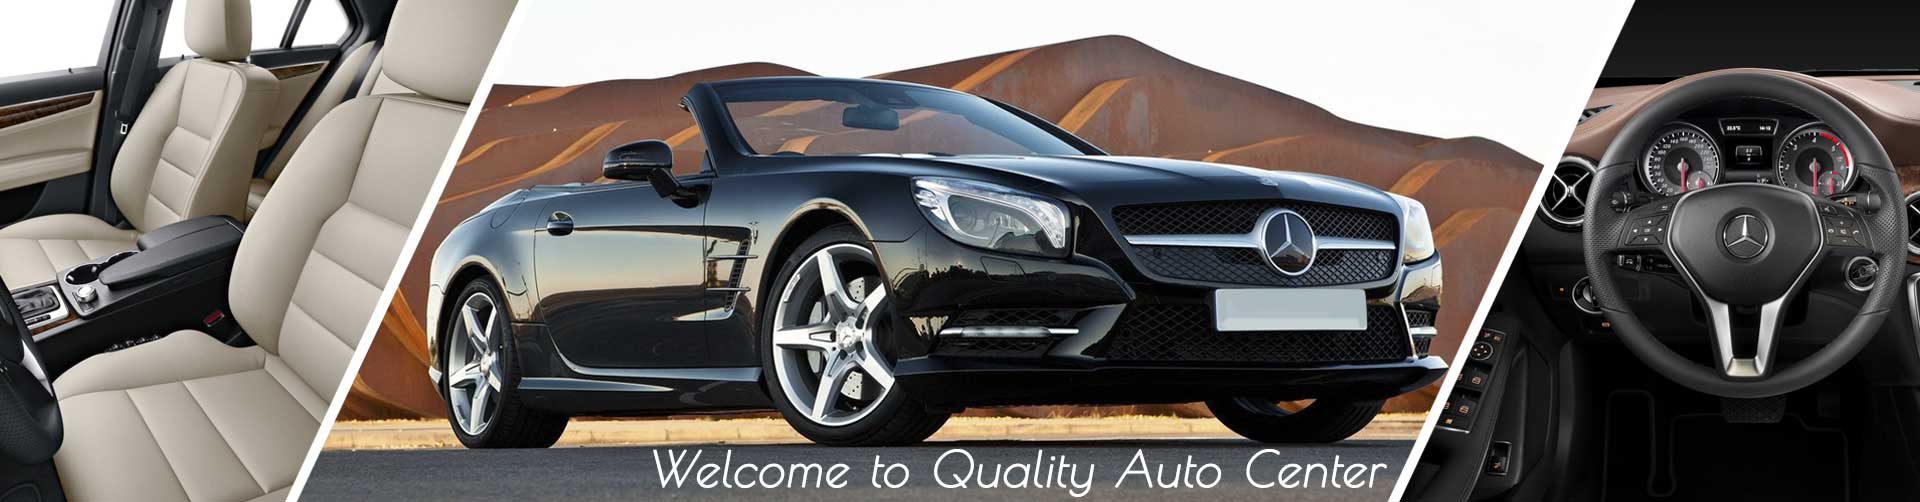 welcome ot Quality Auto Center